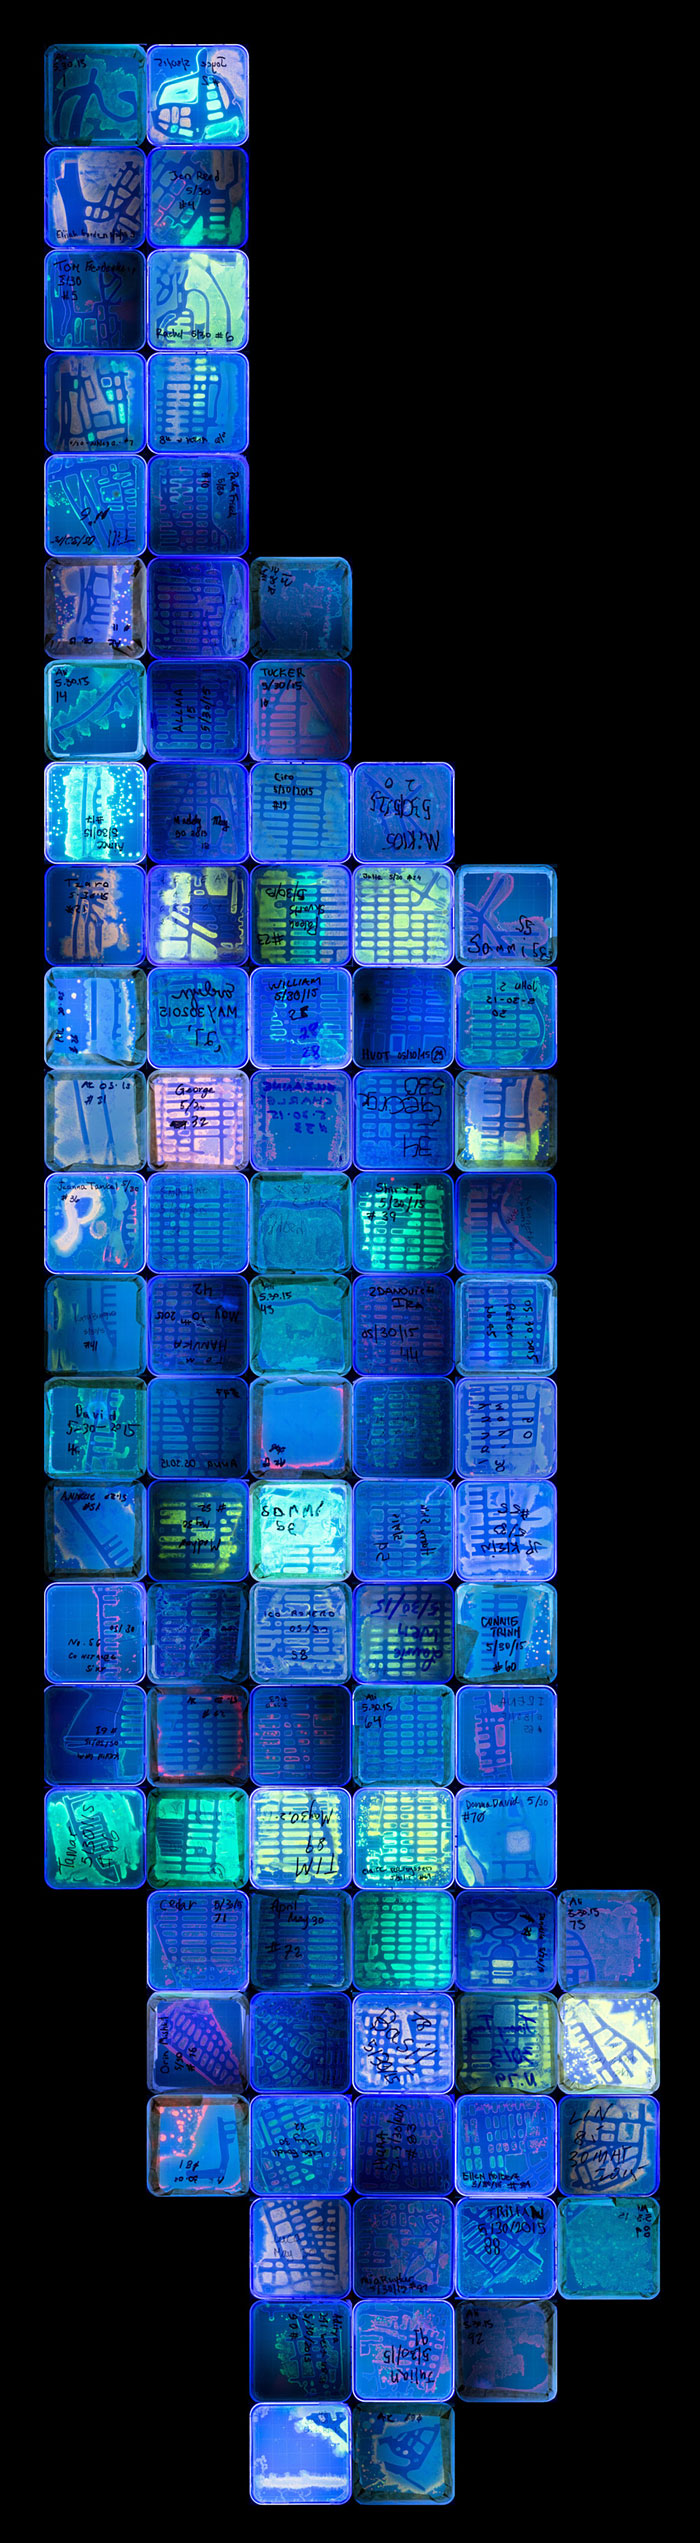 microbe-art-petri-dish-agar-contest-van-gogh-starry-night-american-society-microbiologists-49